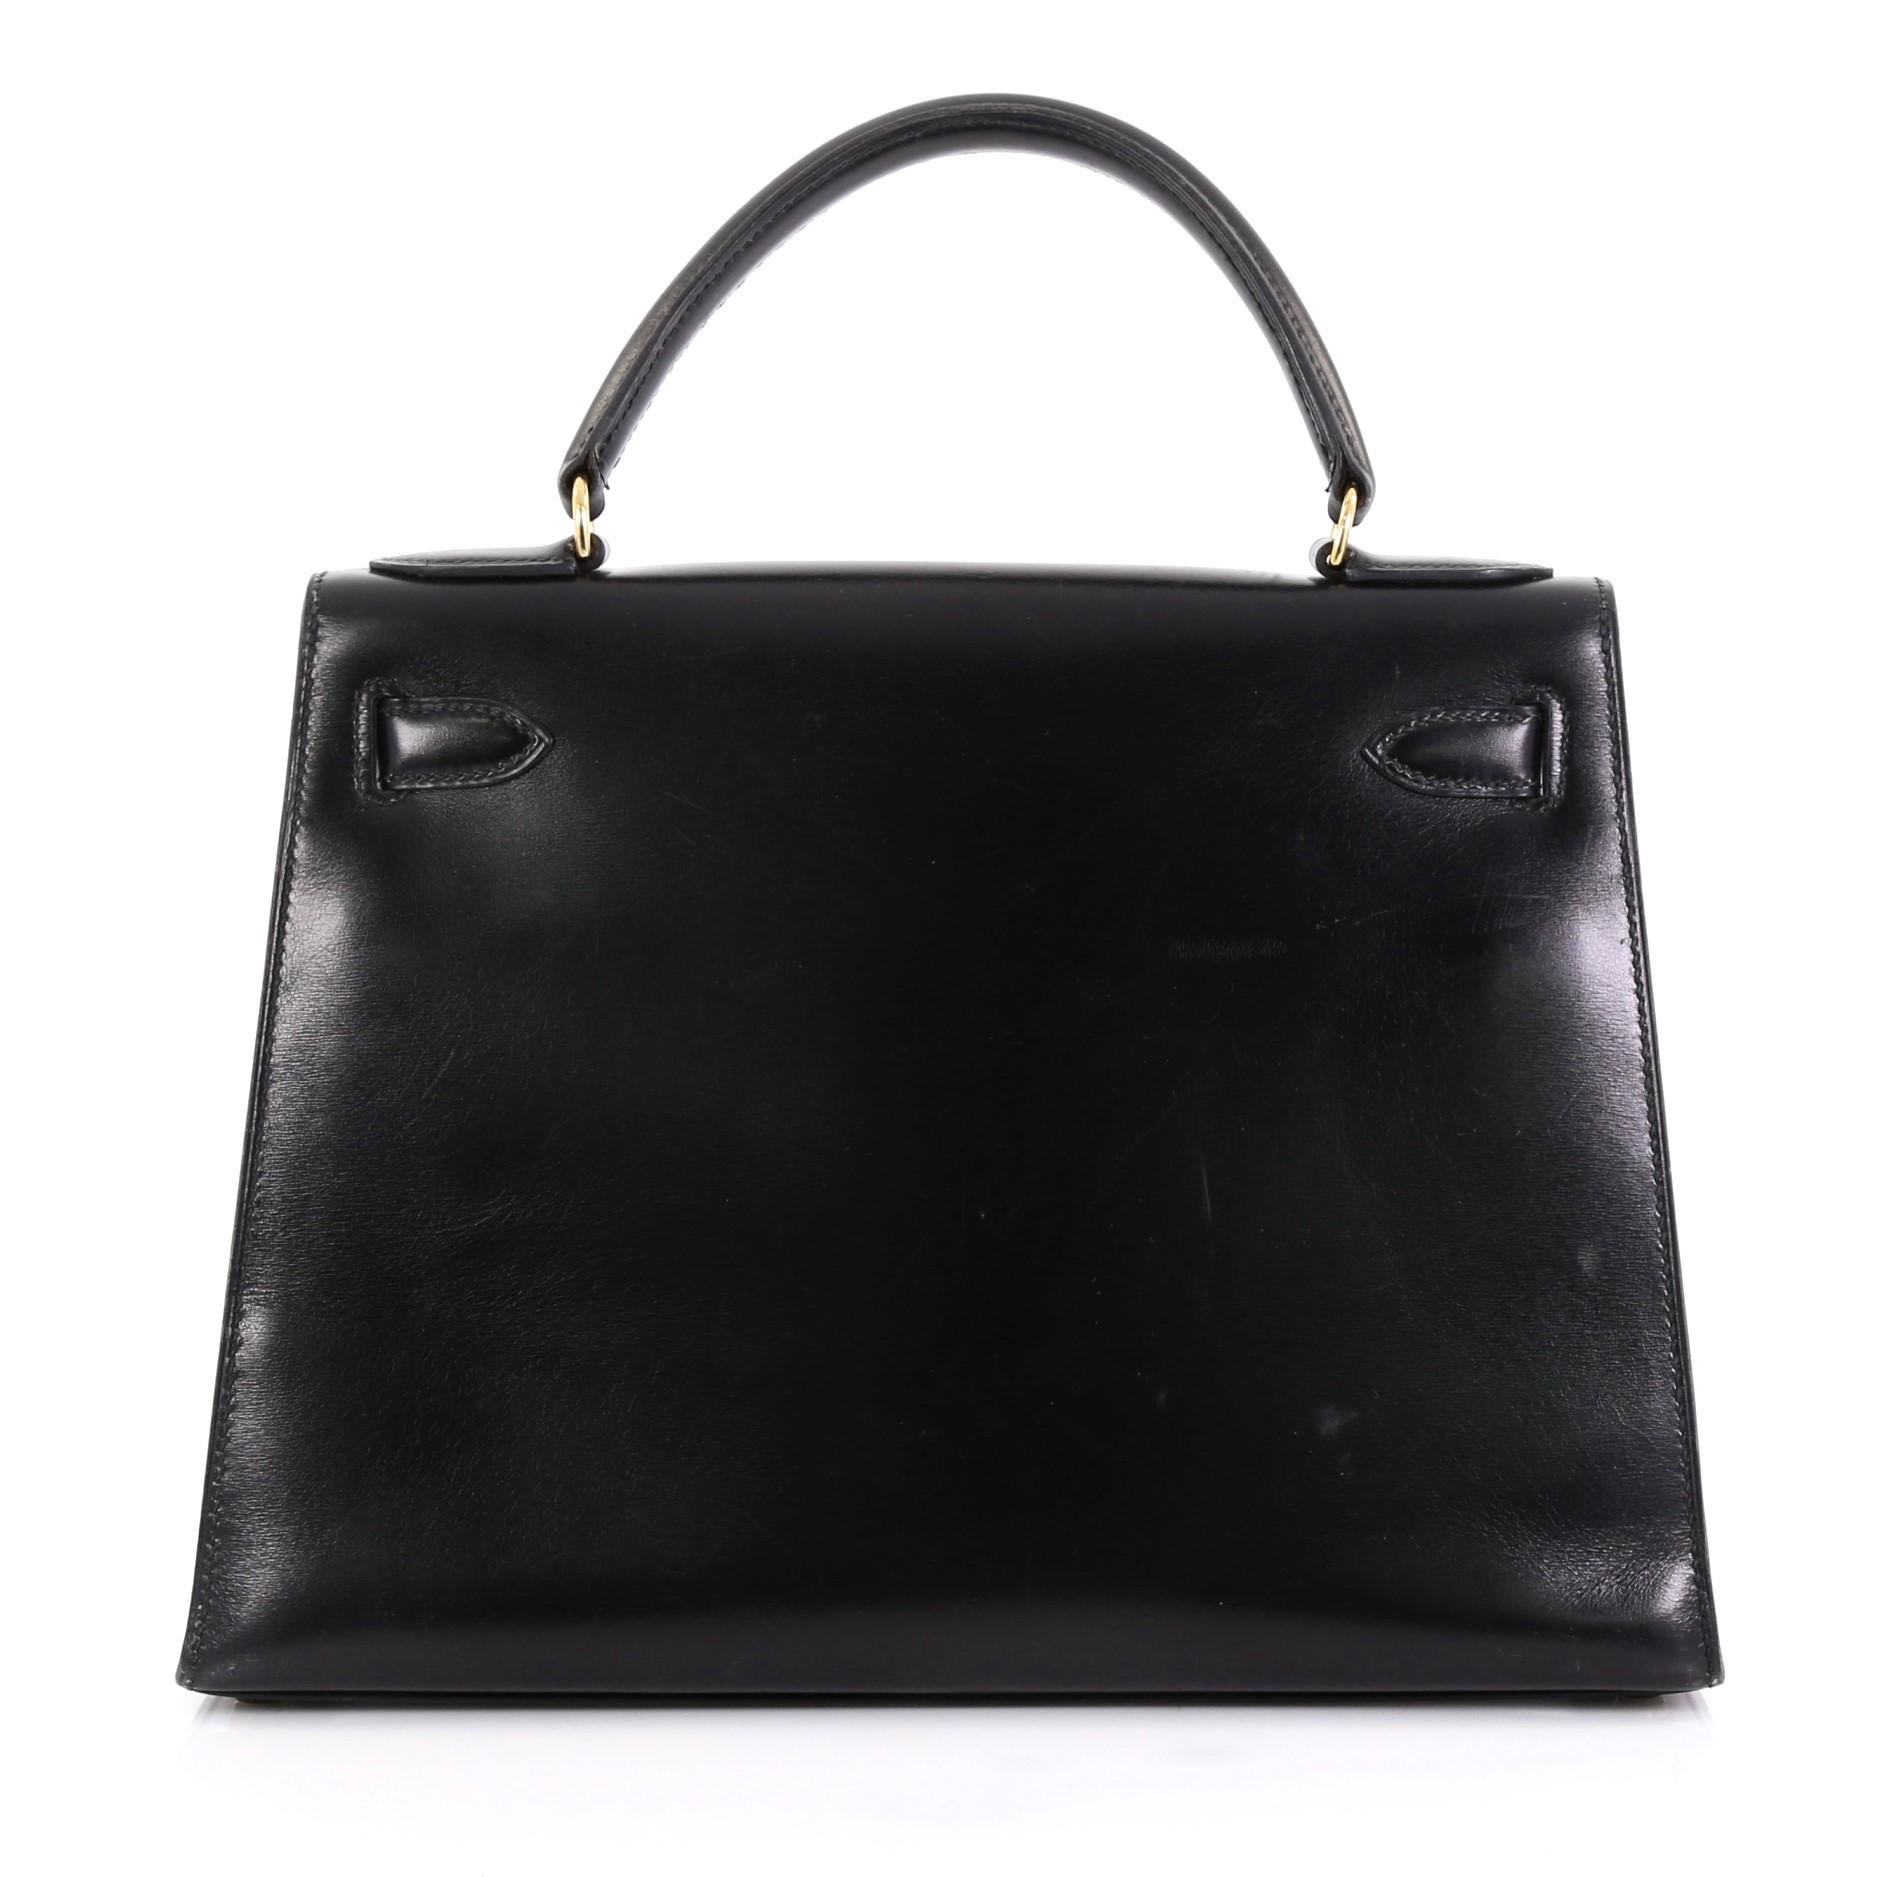 Black Hermes Kelly Handbag Noir Box Calf with Gold Hardware 28